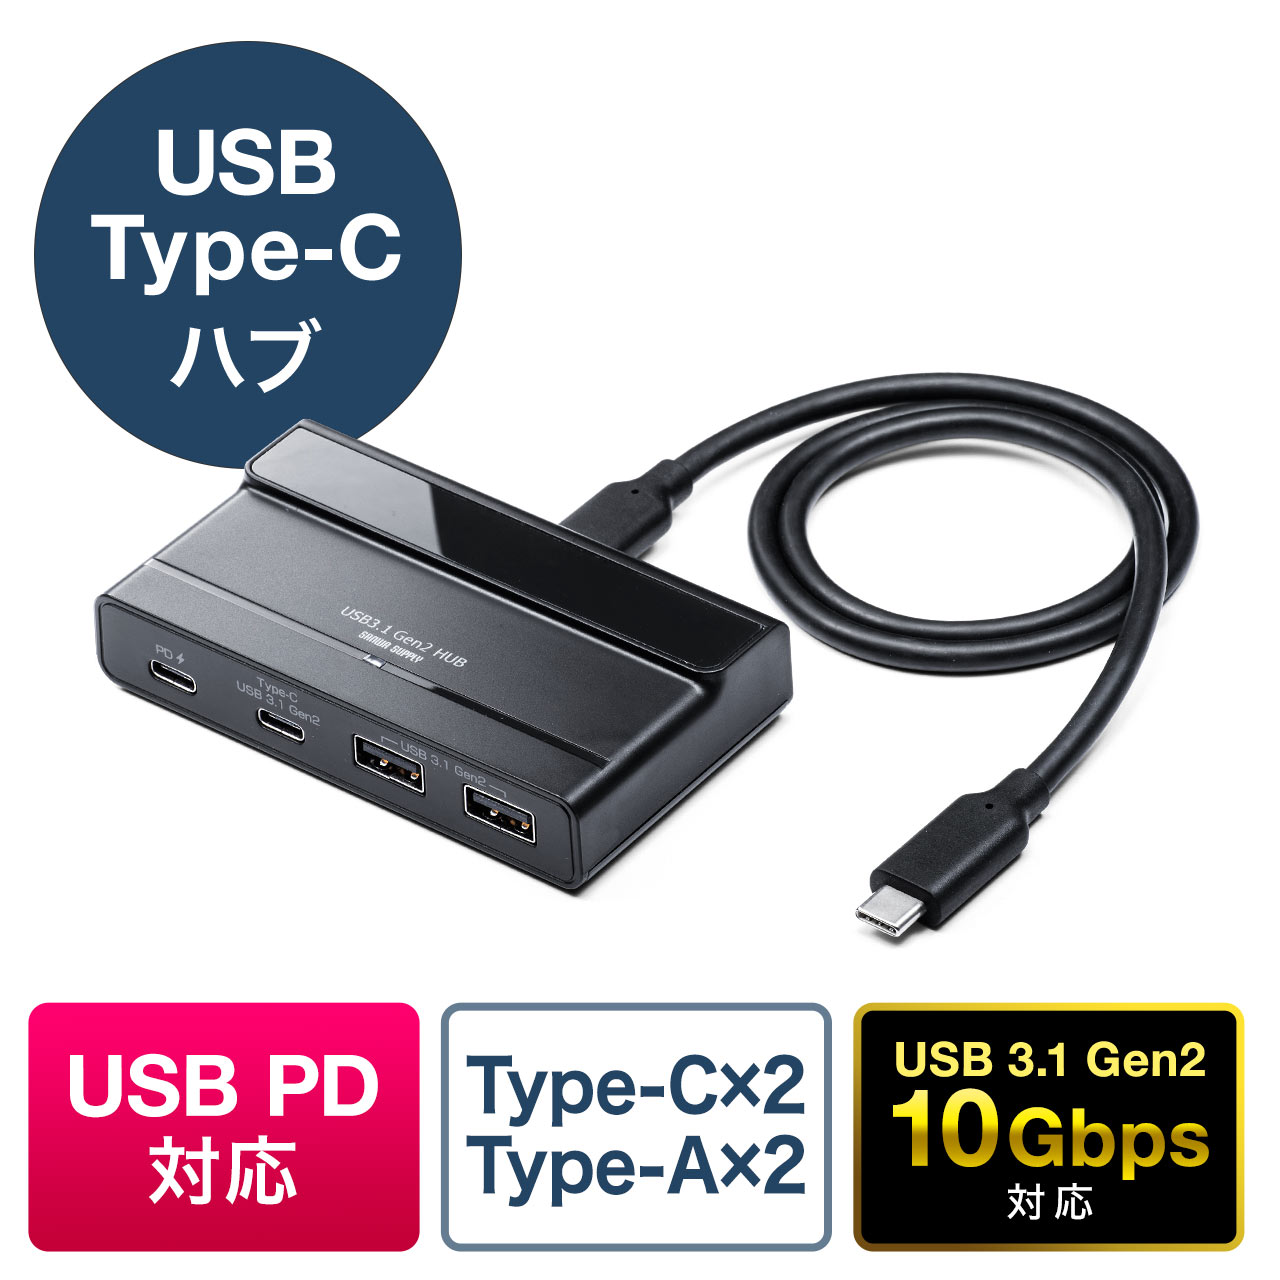 yrWlXZ[zUSB Type-Cnu USB3.1 Gen2 USB Type-C USB A 4|[g USB PDΉ Ztp[ ACA_v^t ubN 400-HUB075BK